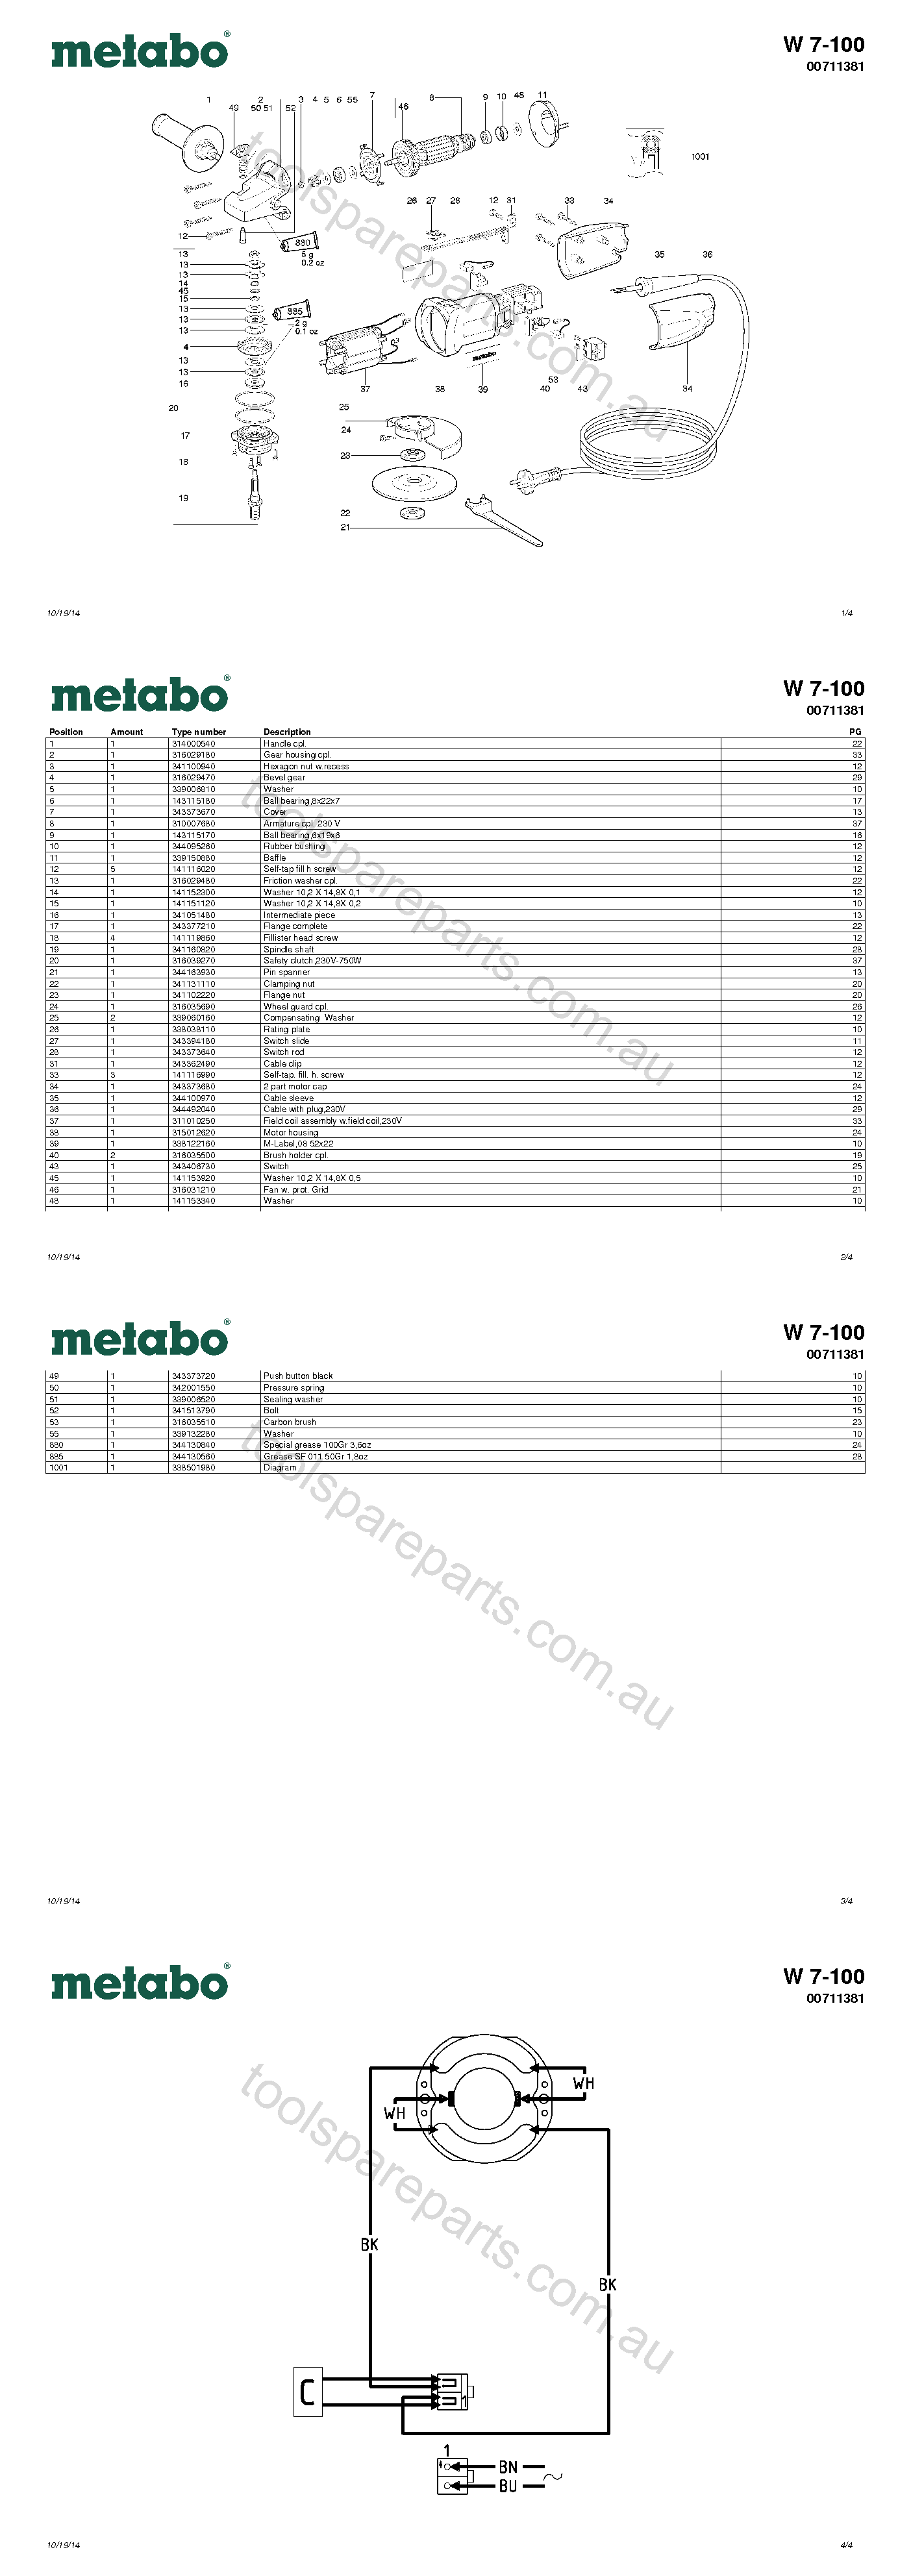 Metabo W 7-100 00711381  Diagram 1